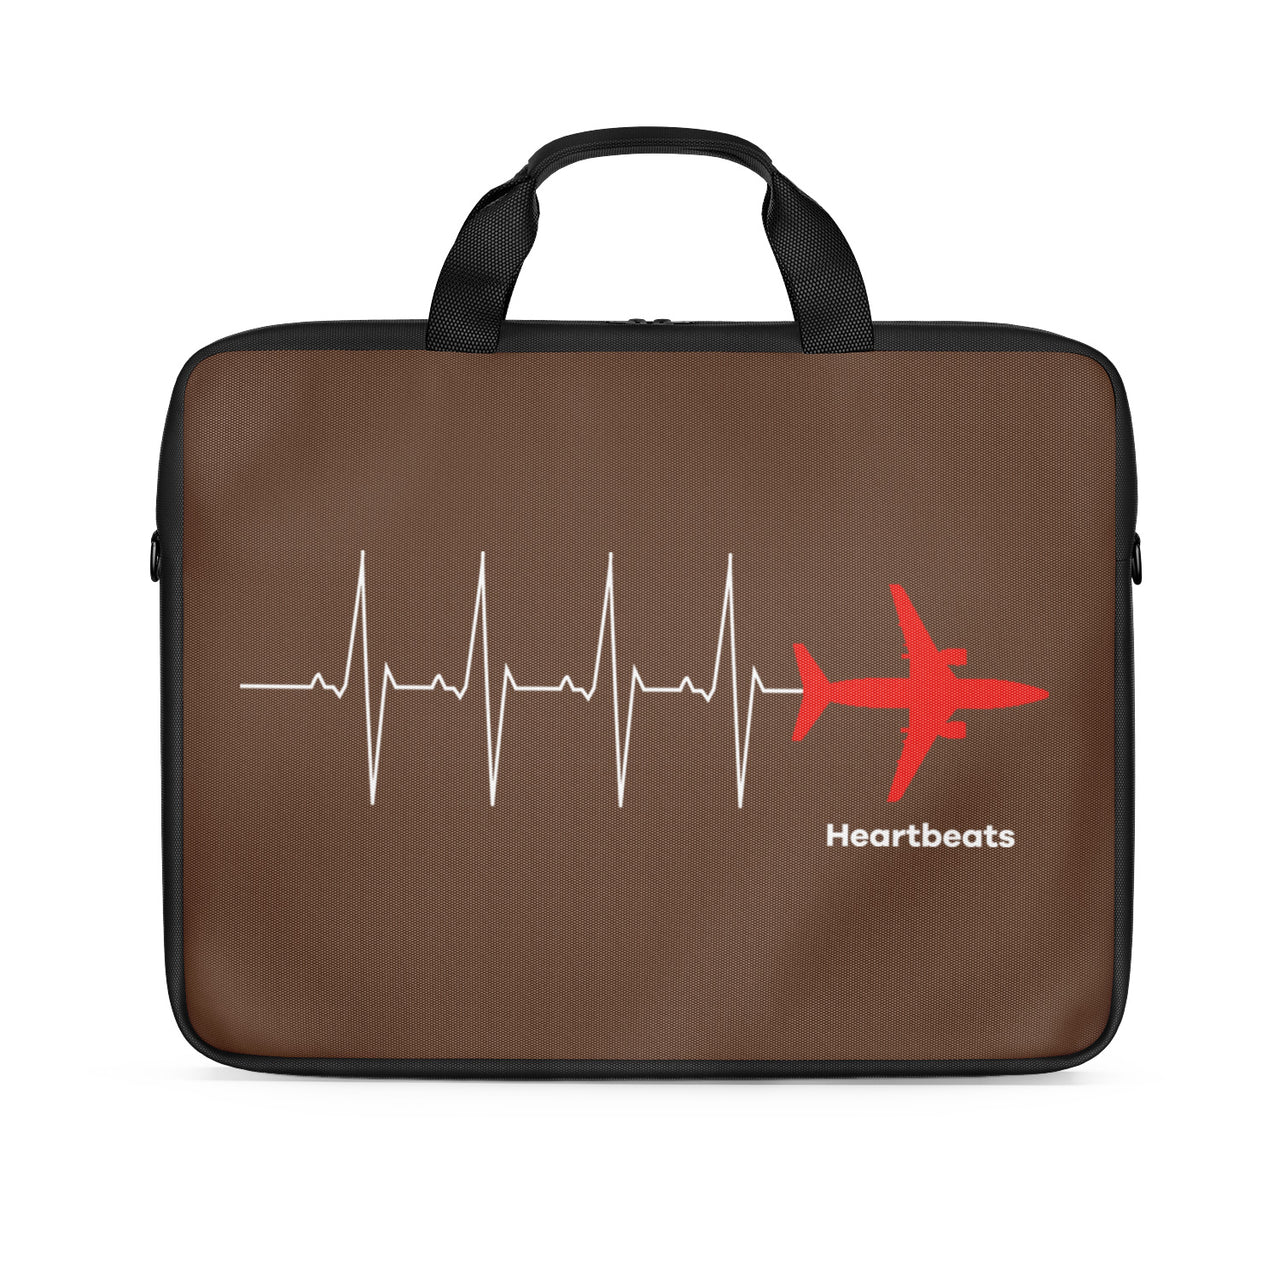 Aviation Heartbeats Designed Laptop & Tablet Bags